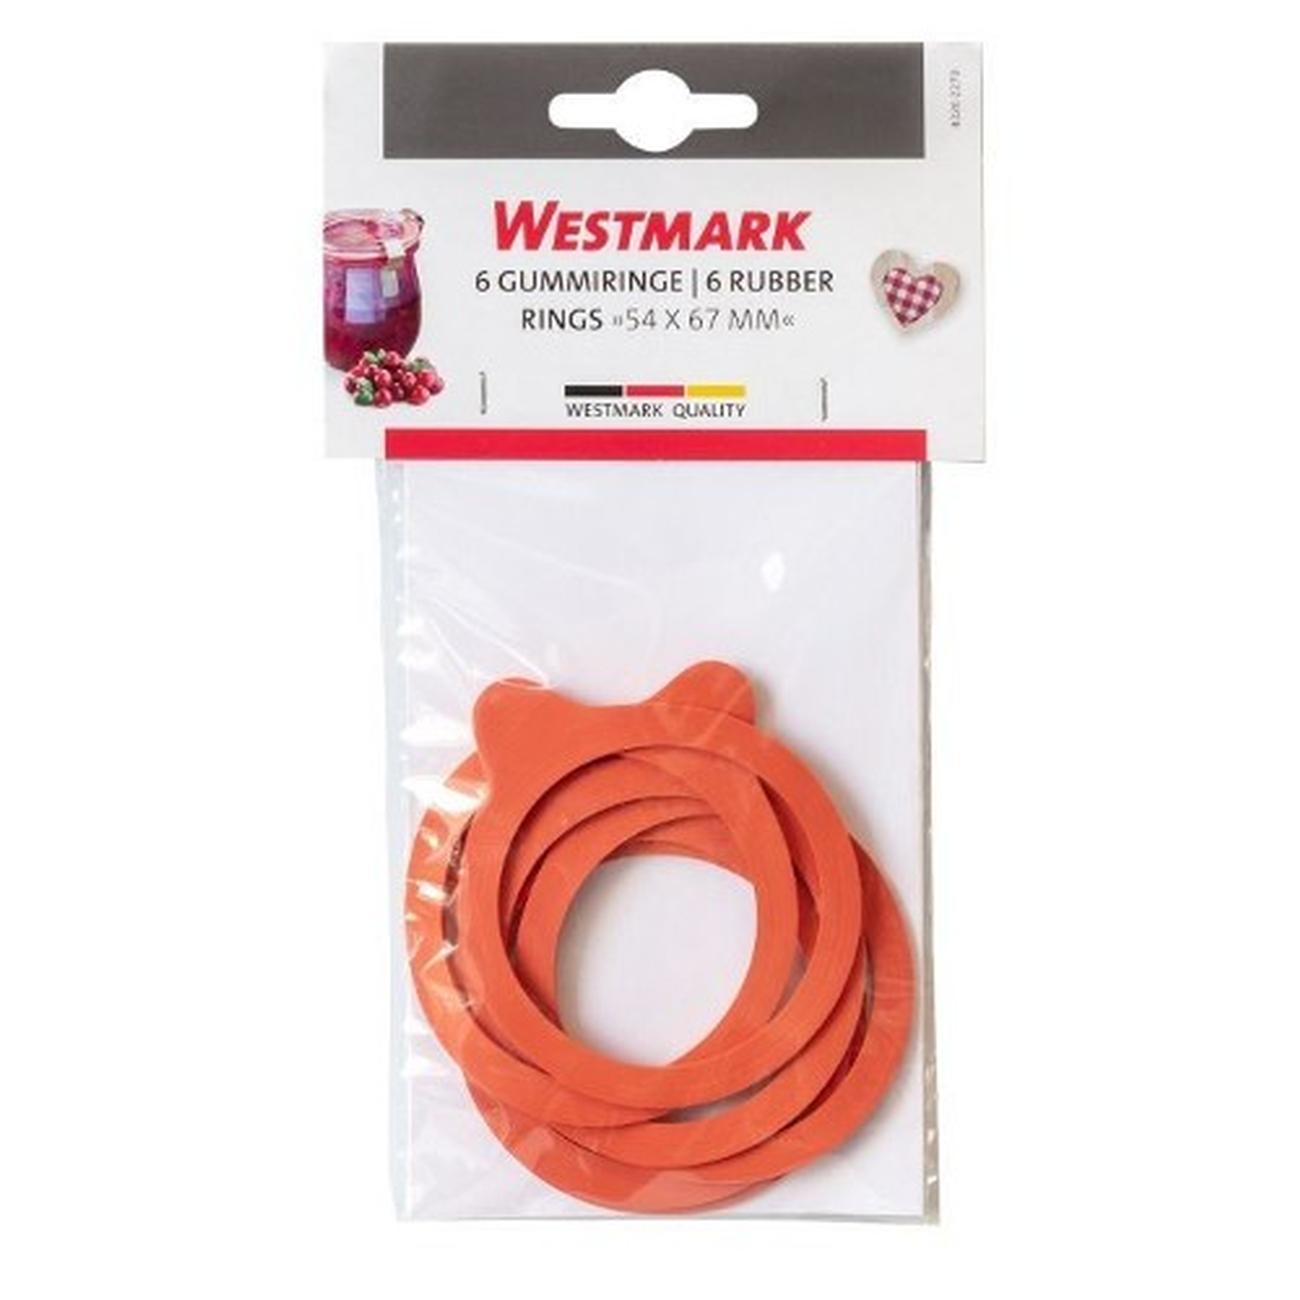 weck-jar-rubber-rings-54x67mm - Westmark Set of 6 Weck Jar Rubber Seals 54x67mm